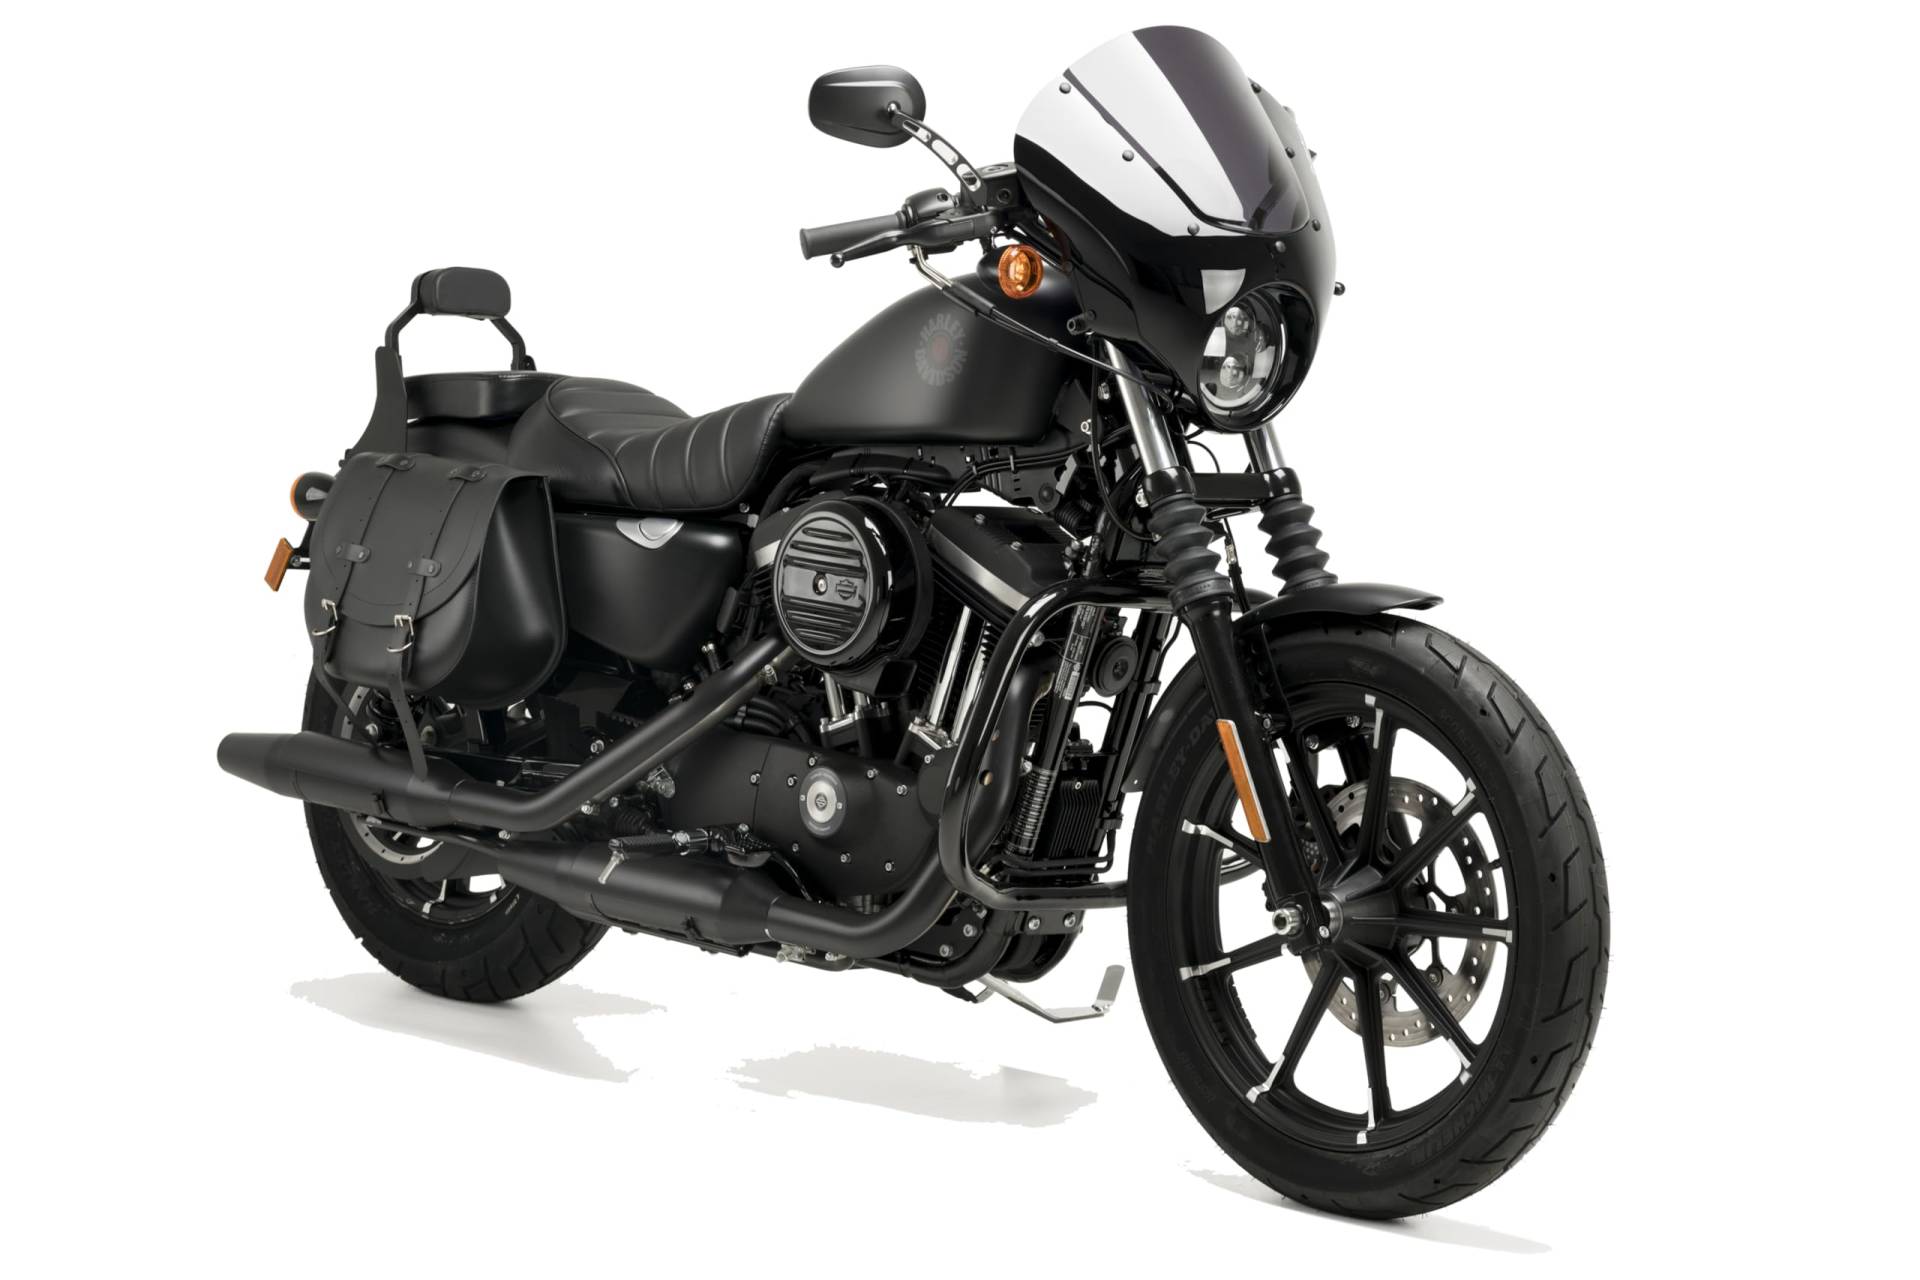 Sturzbügel Customacces für Harley Davidson Sportster XL1200C Custom 04'-20'; Harley Davidson Sportster XL1200N Iron 18'-20' von Customacces